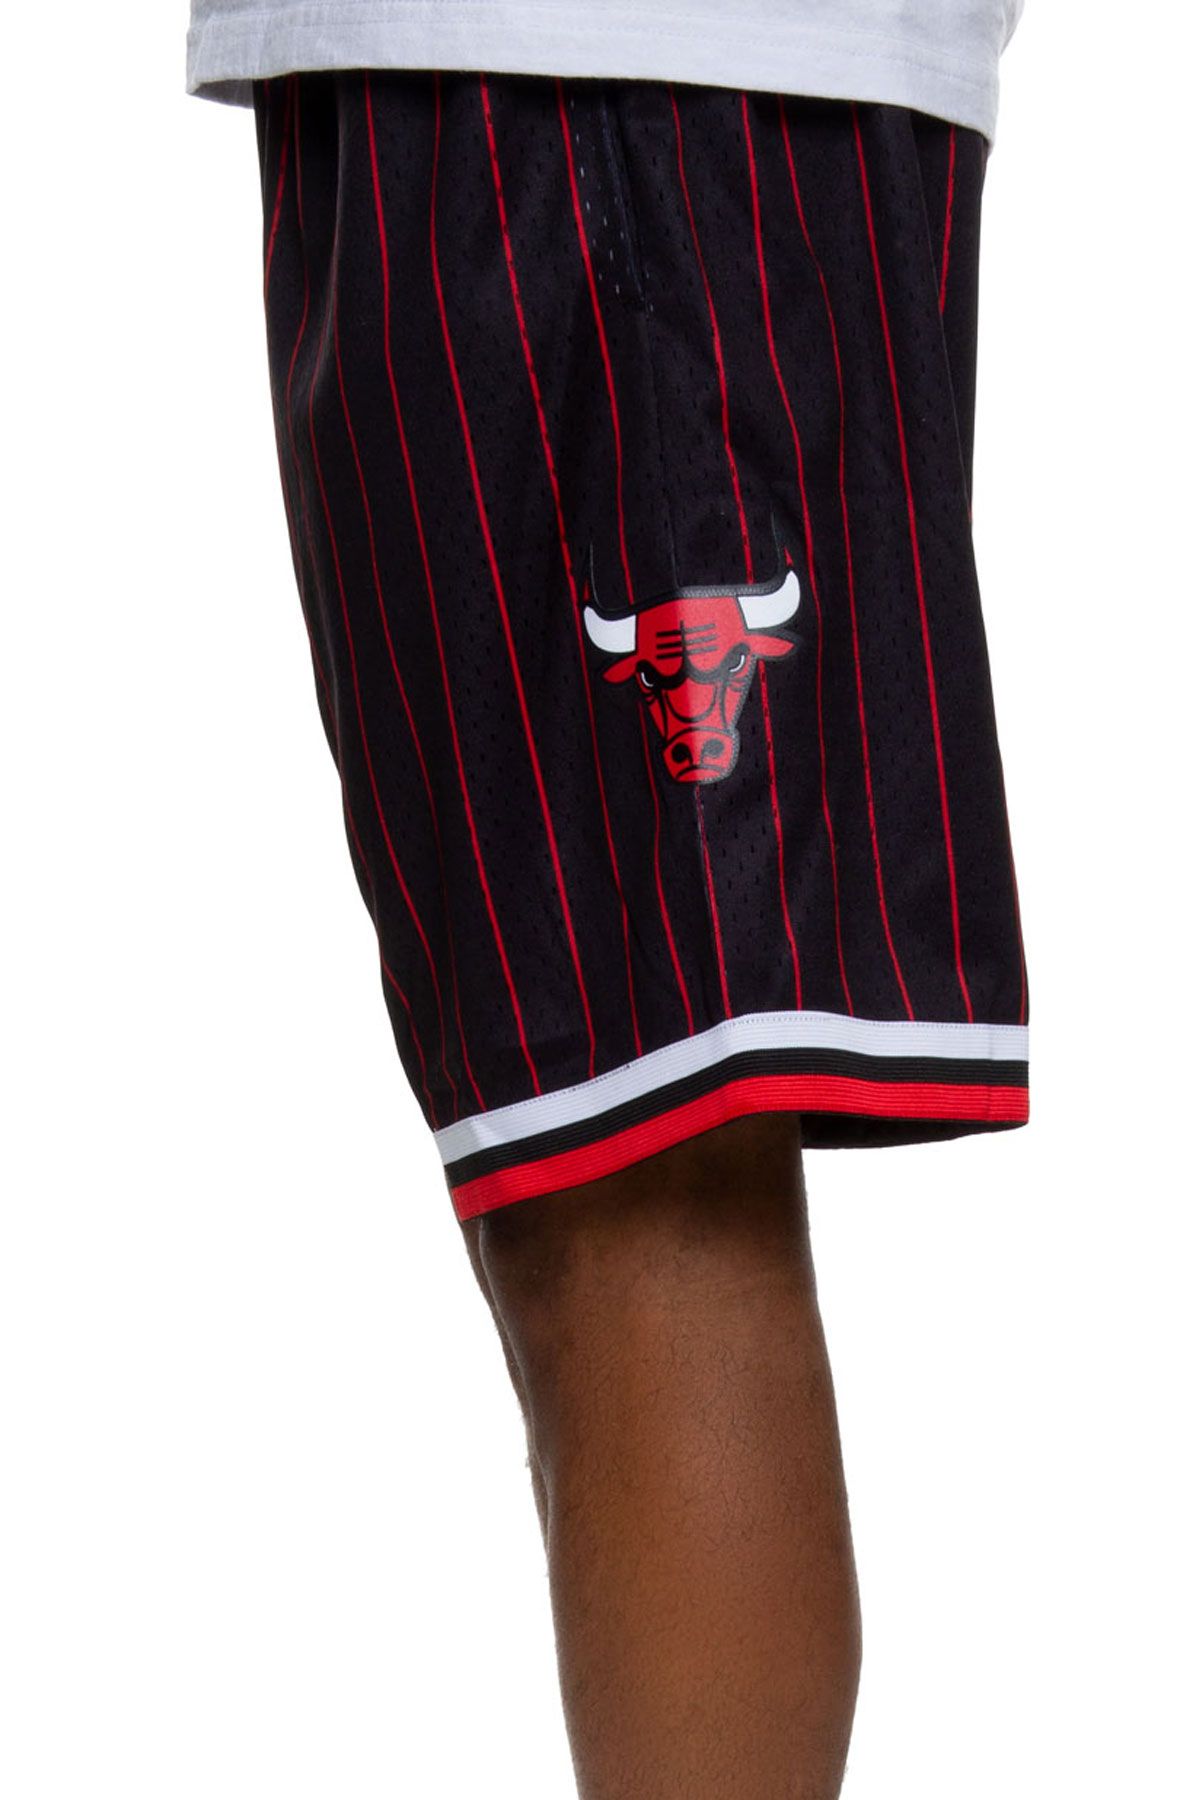 Mitchell+%26+Ness+Chicago+Bulls+1996+Black+Pin+Stripe+Swingman+Shorts+Size+Medium  for sale online